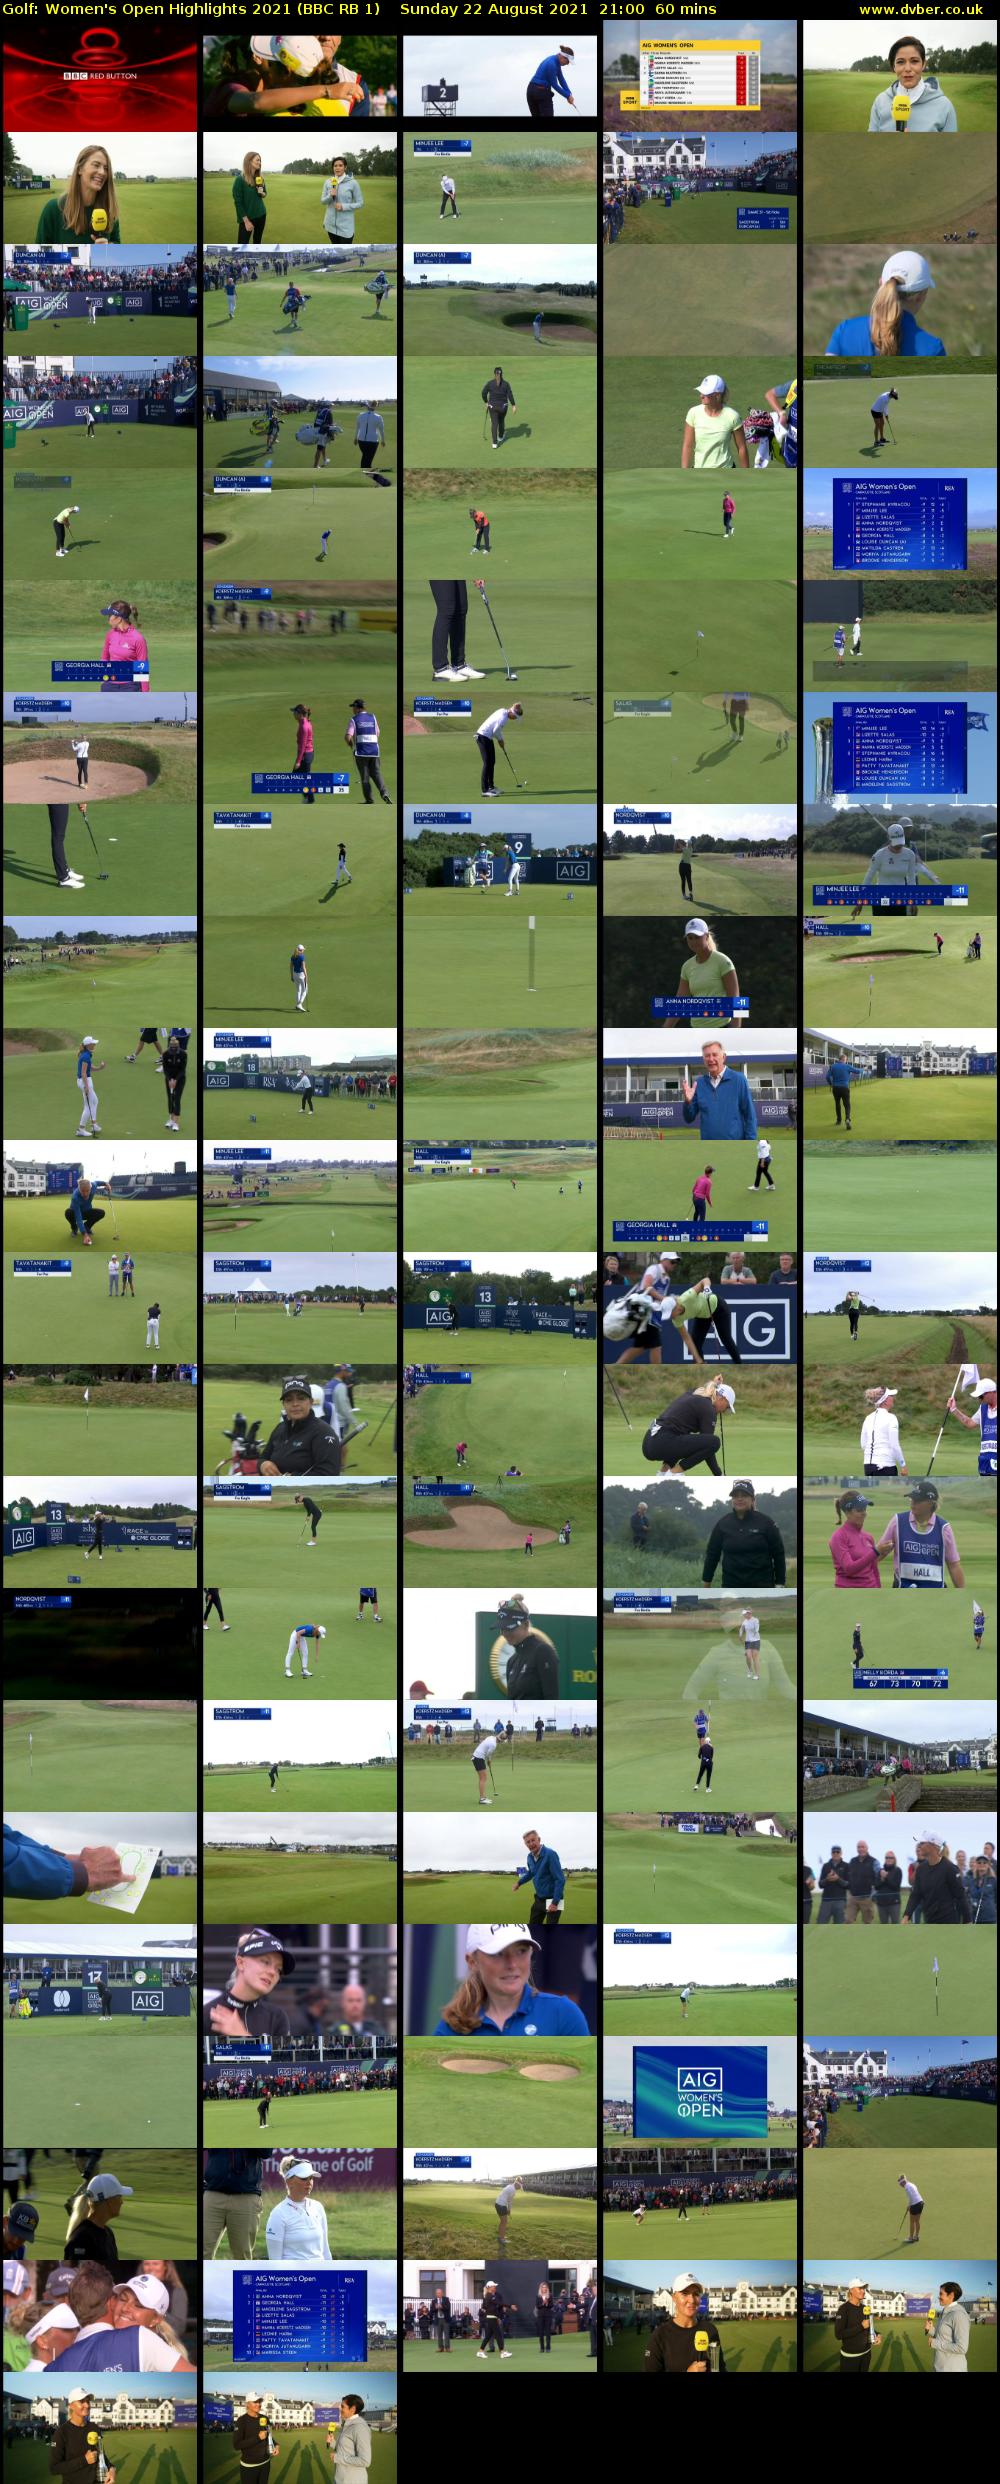 Golf: Women's Open Highlights 2021 (BBC RB 1) Sunday 22 August 2021 21:00 - 22:00